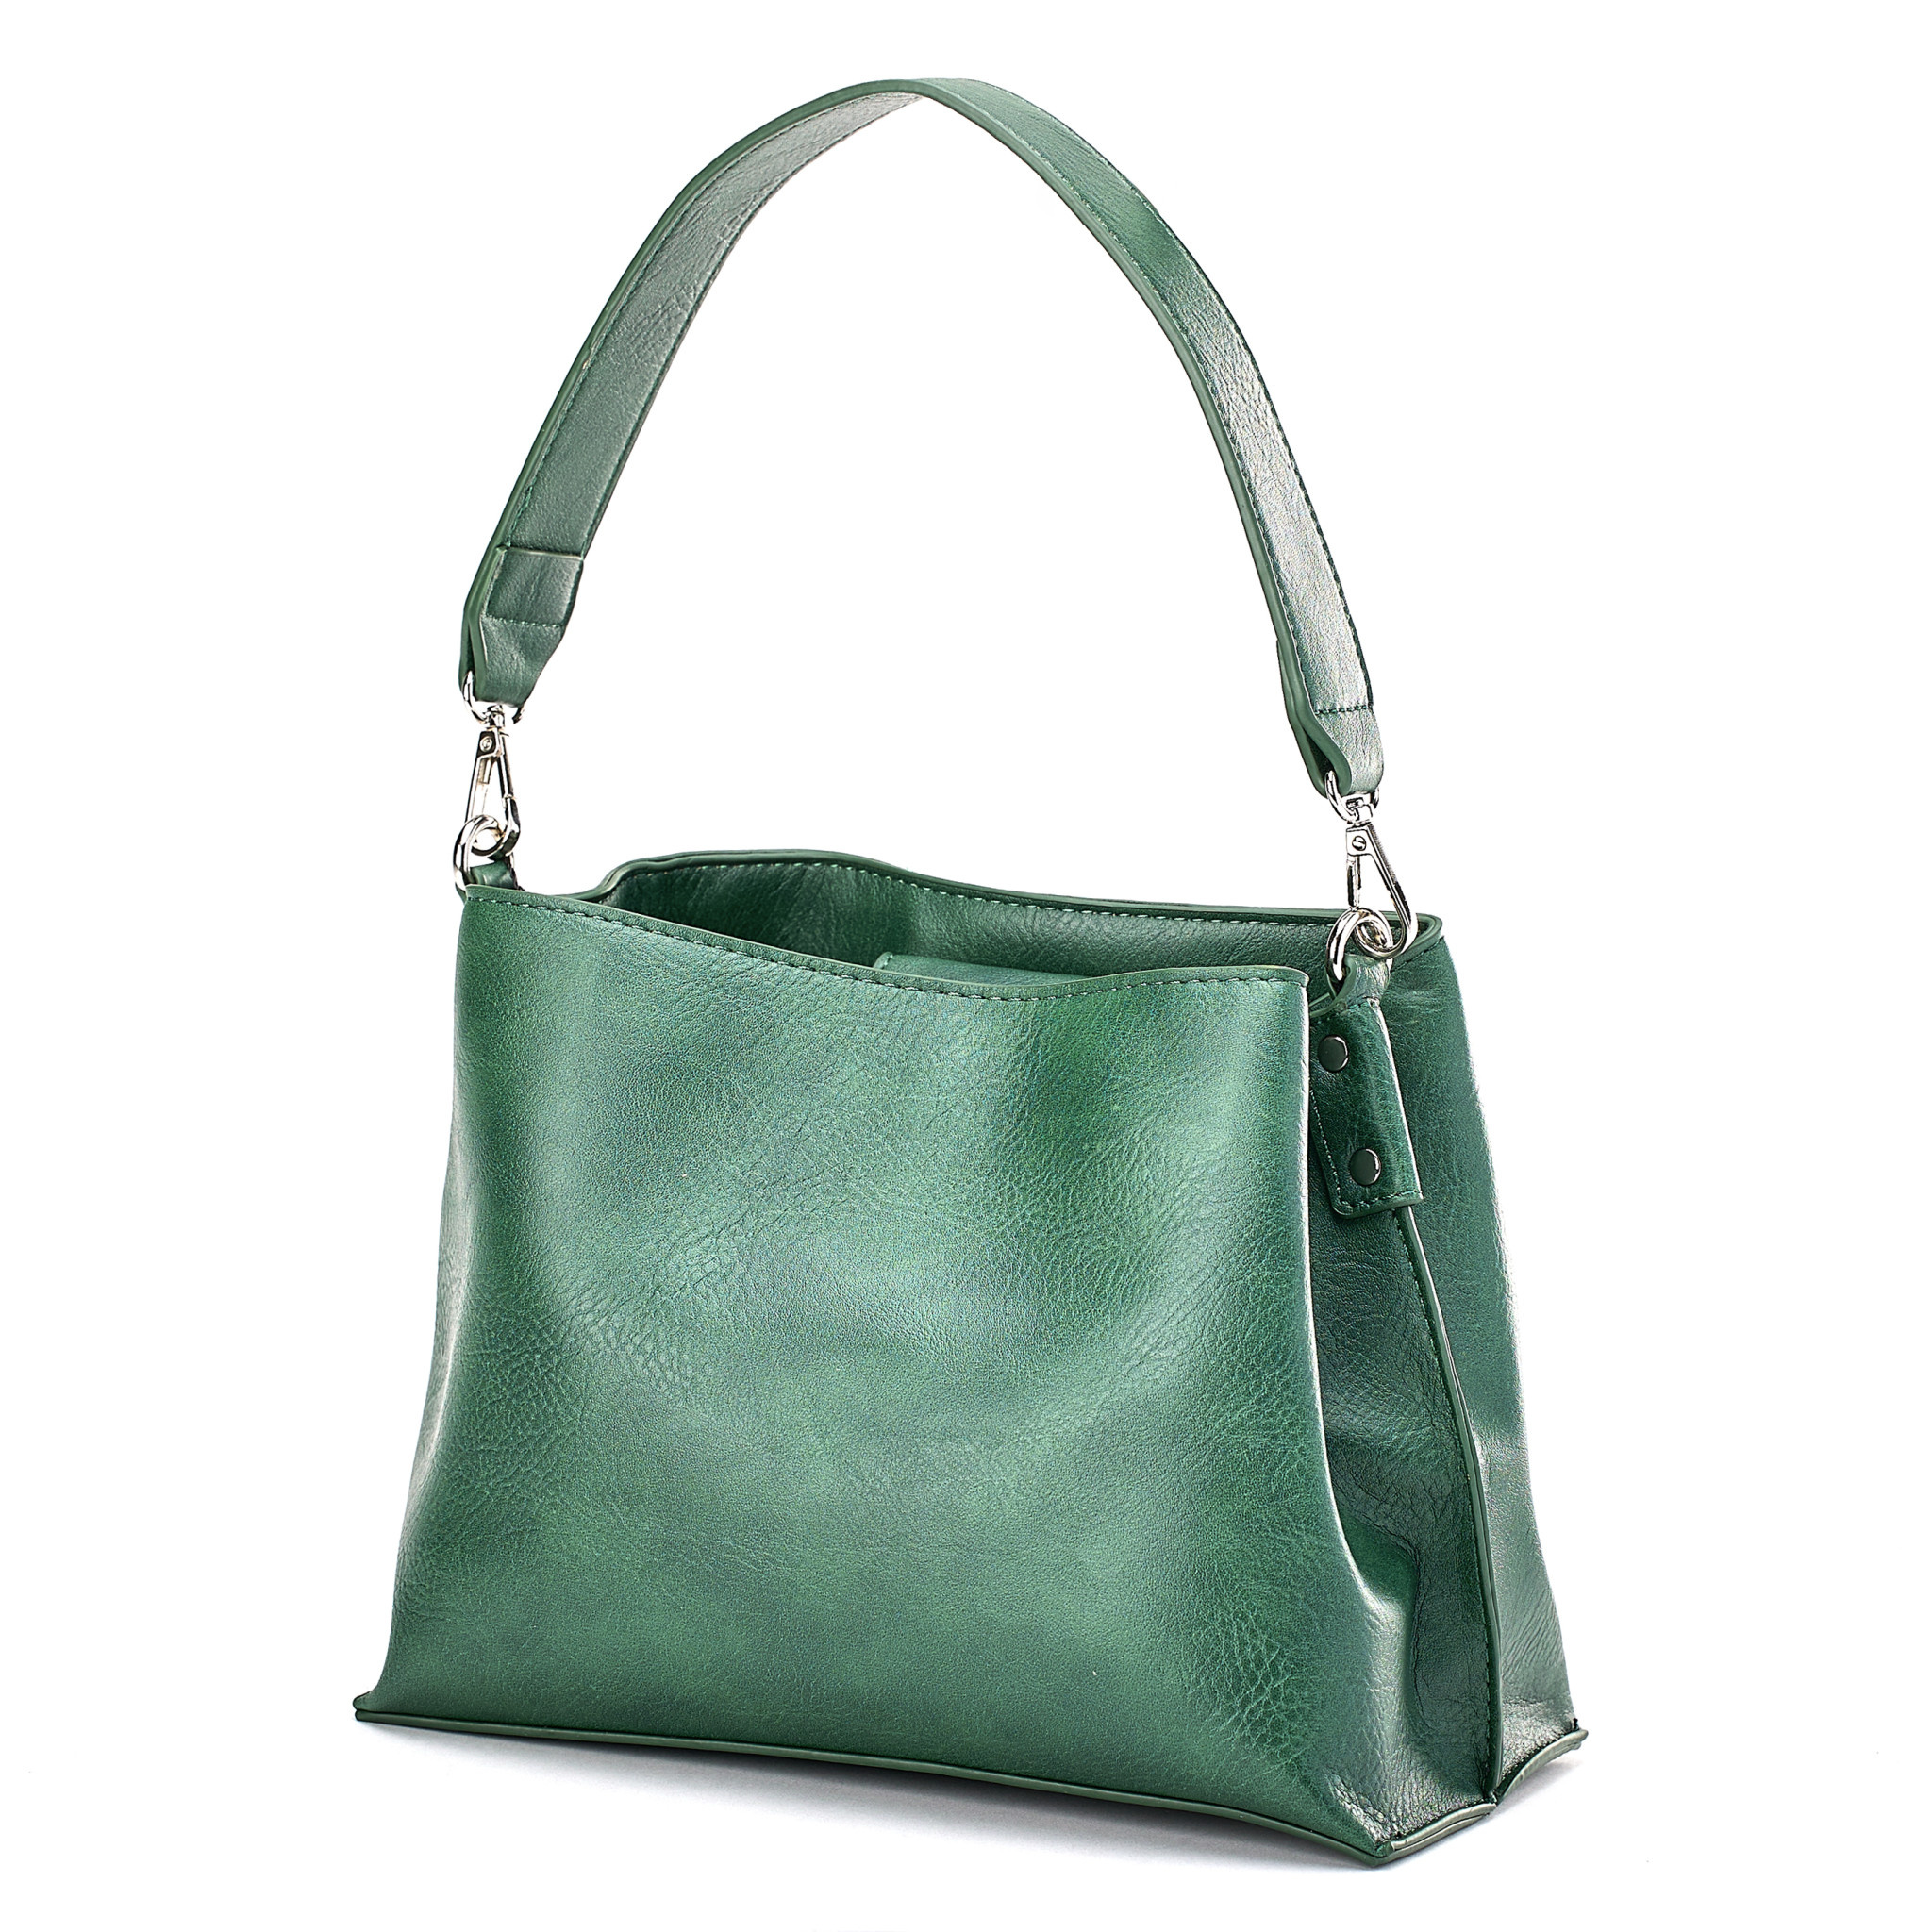 Green Leather Purse for Women - Basile 1960 Malachite | PAUL MARIUS